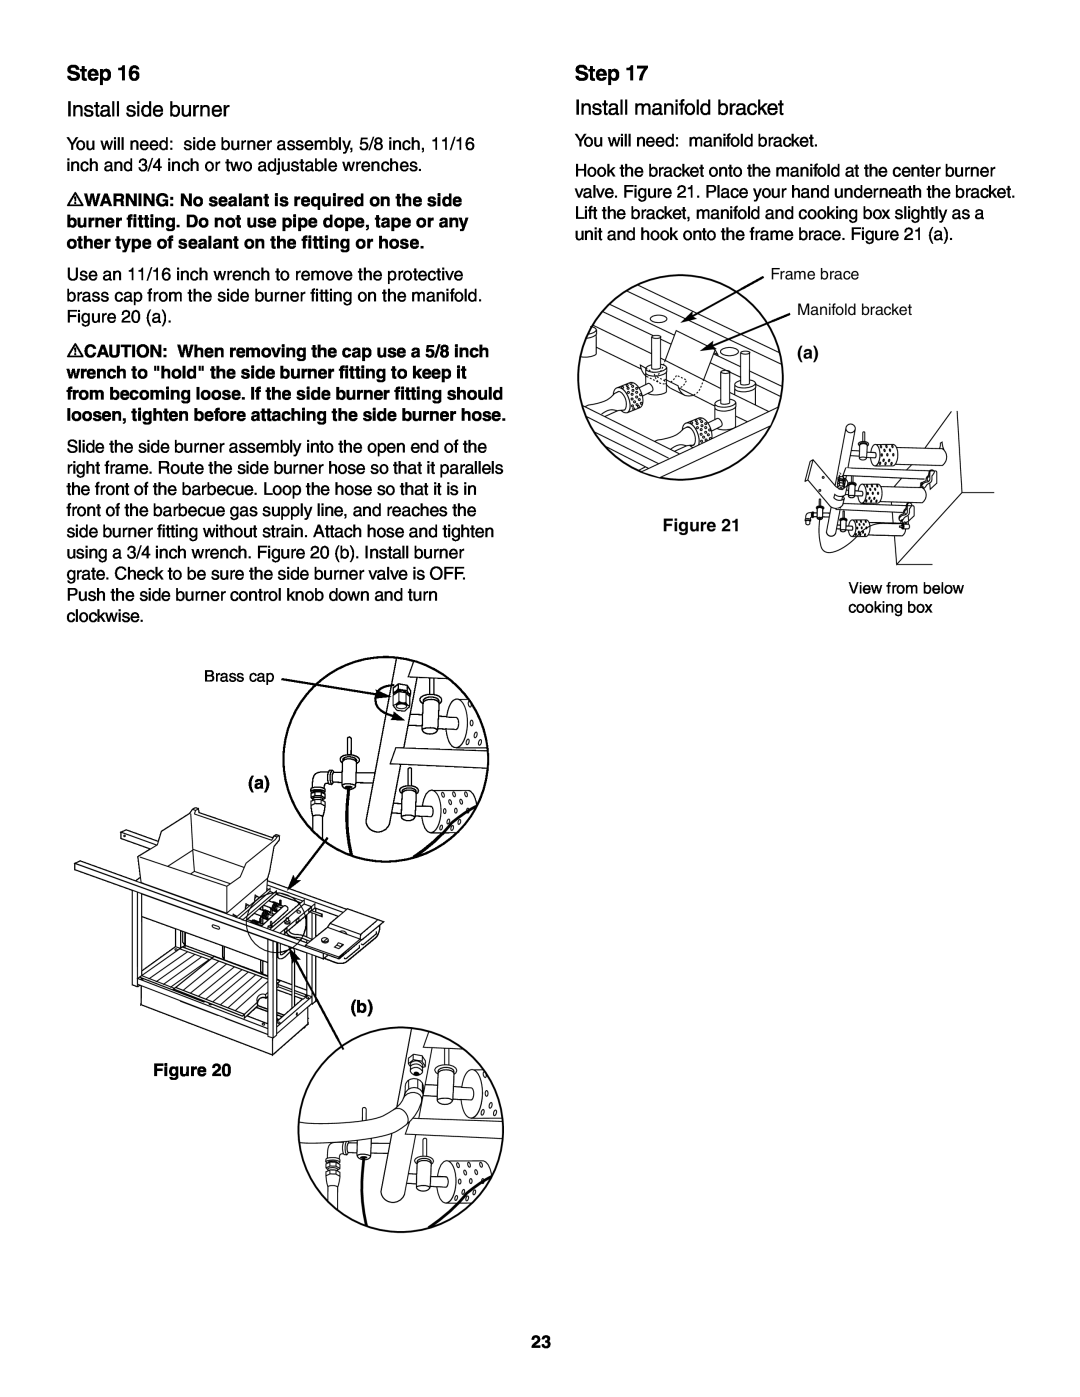 Weber 5500 owner manual Step, Install side burner, Install manifold bracket, a b Figure, a Figure 